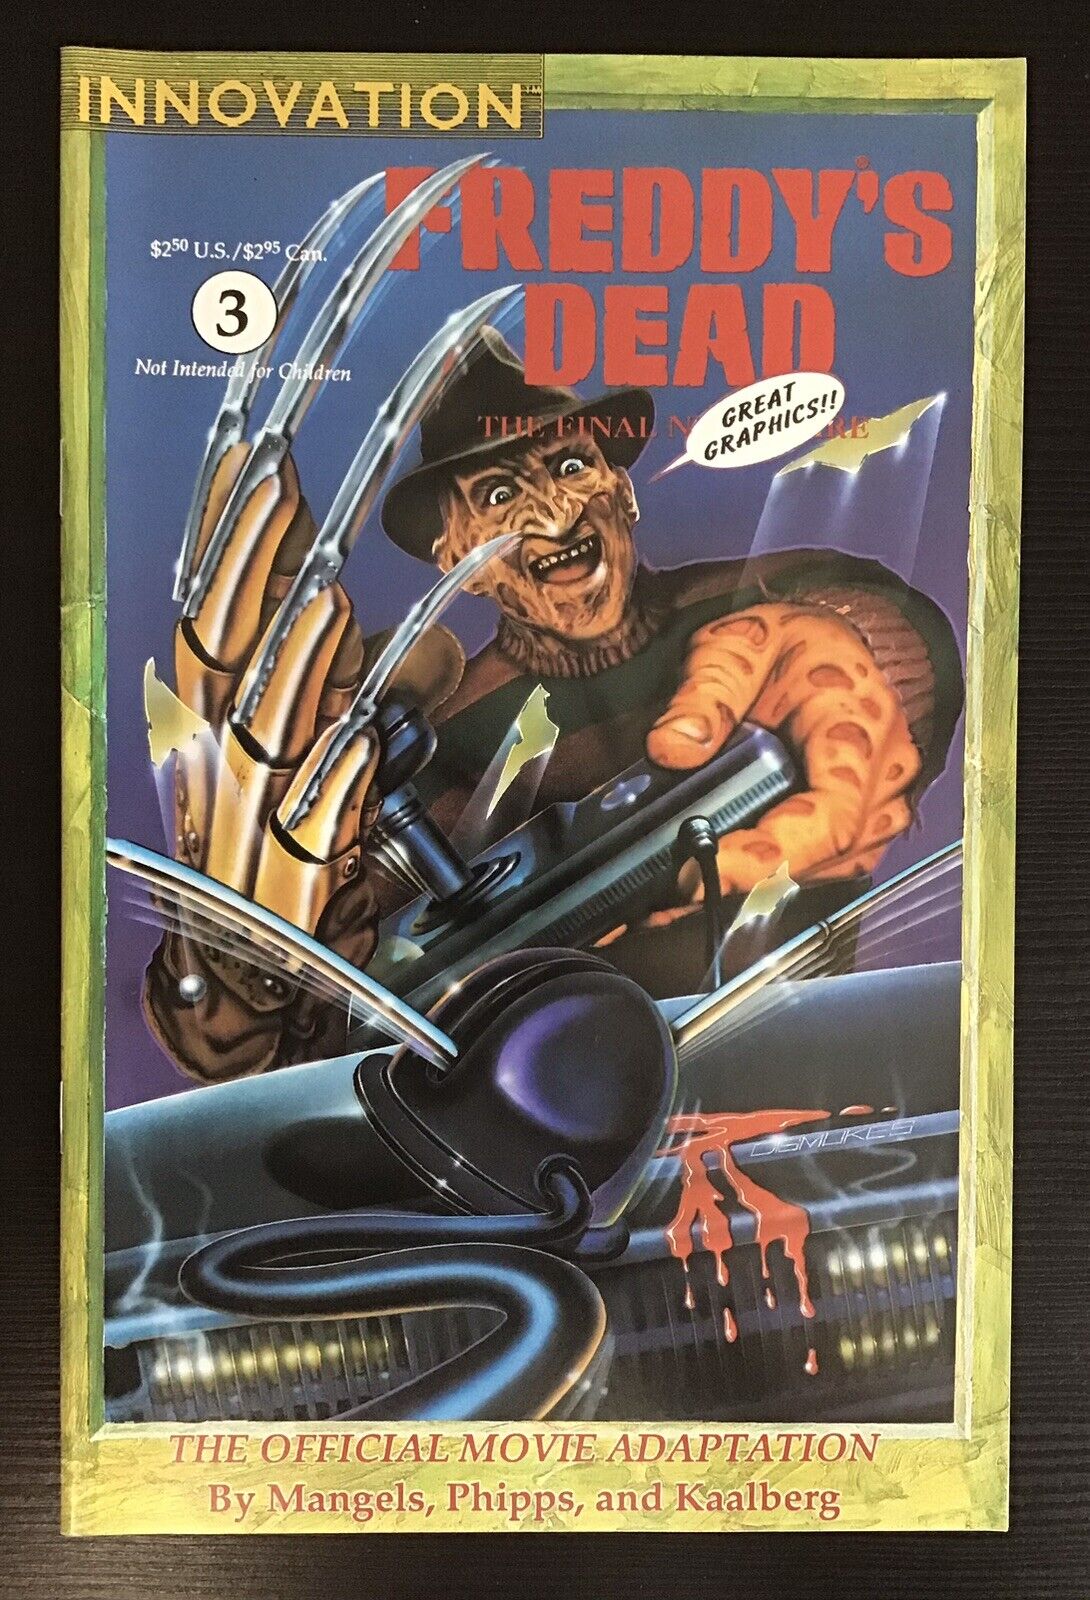 Freddy\'s Dead The Final Nightmare #3 (Innovation 1991) - Nightmare On Elm Street